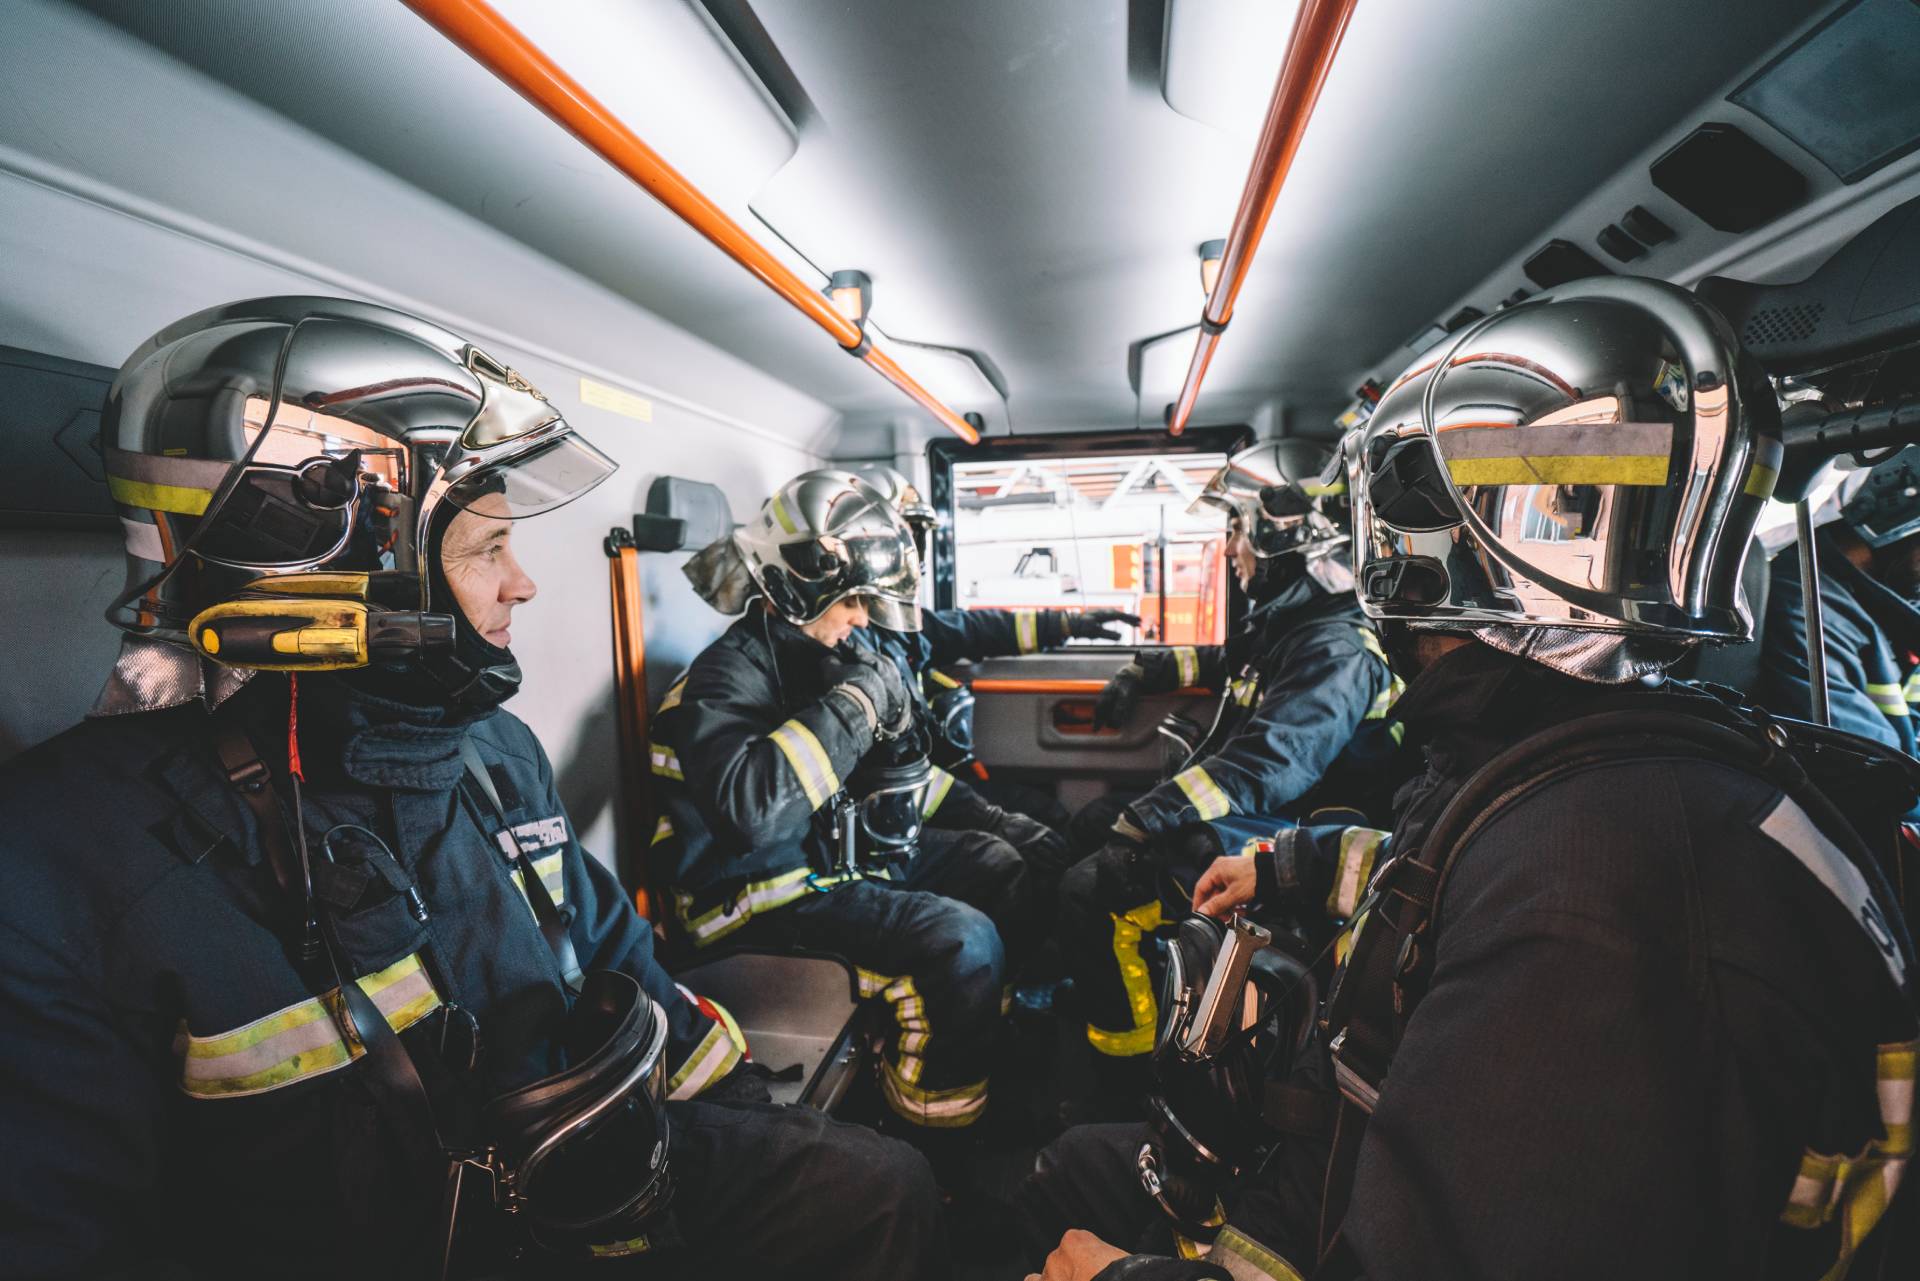 firemen working inside an emergency vehicle 2023 11 27 05 02 28 utc 1